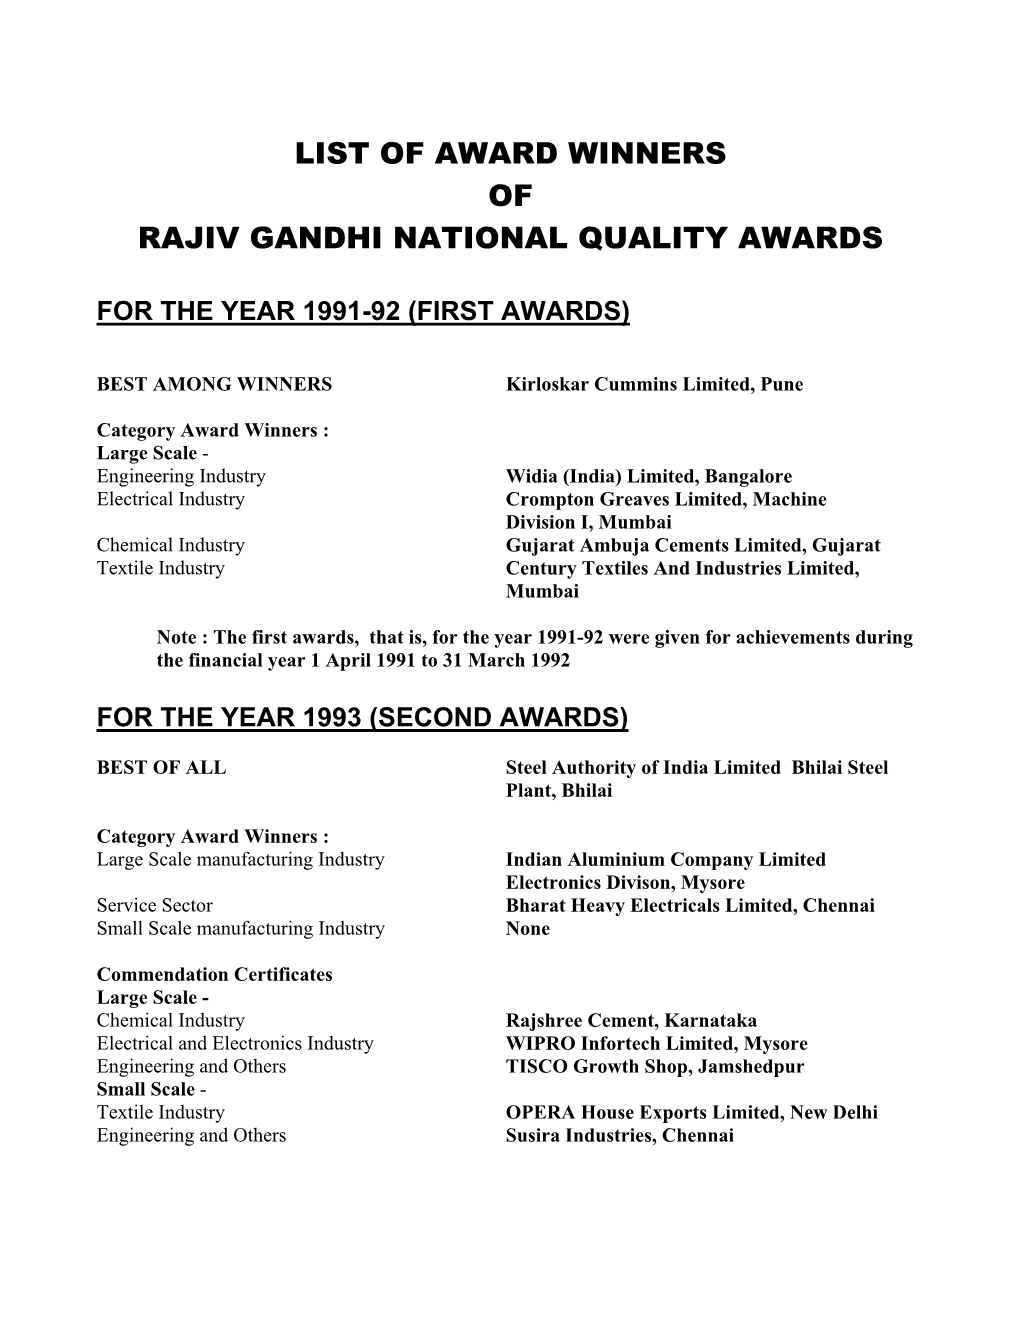 List of Award Winners of Rajiv Gandhi National Quality Awards